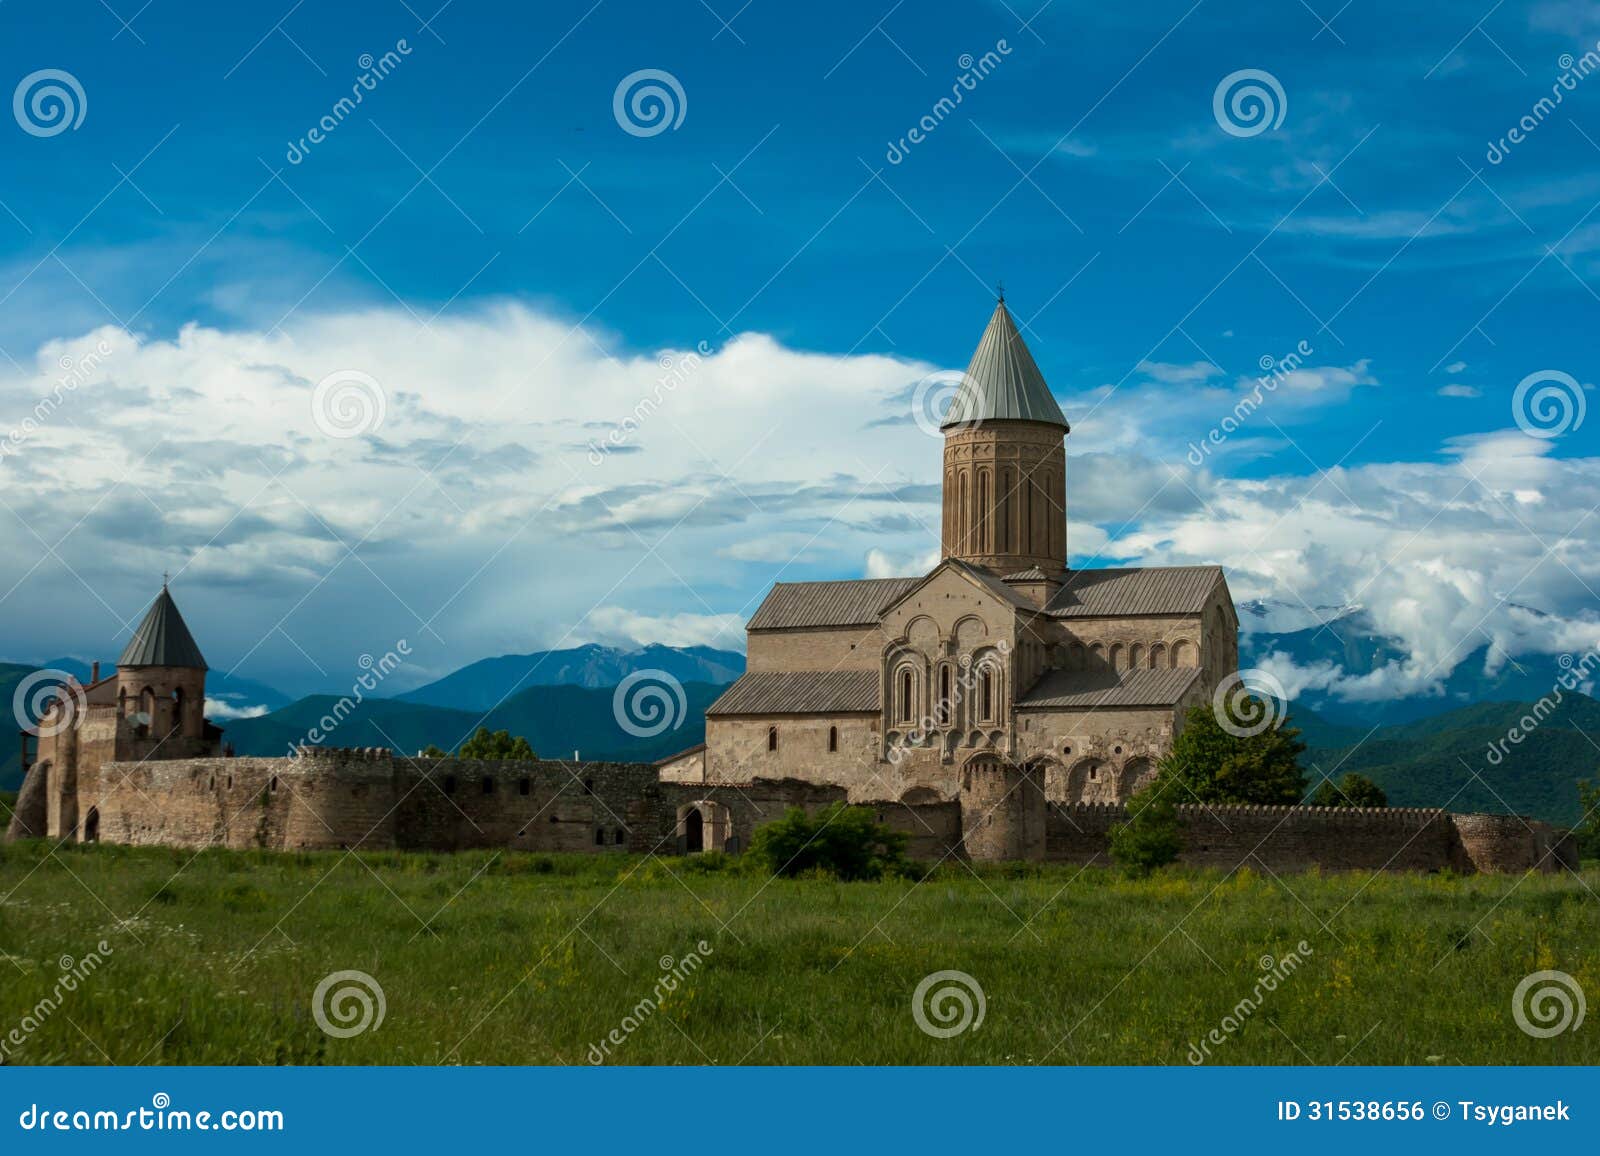 alaverdi monastery in kakheti, georgia